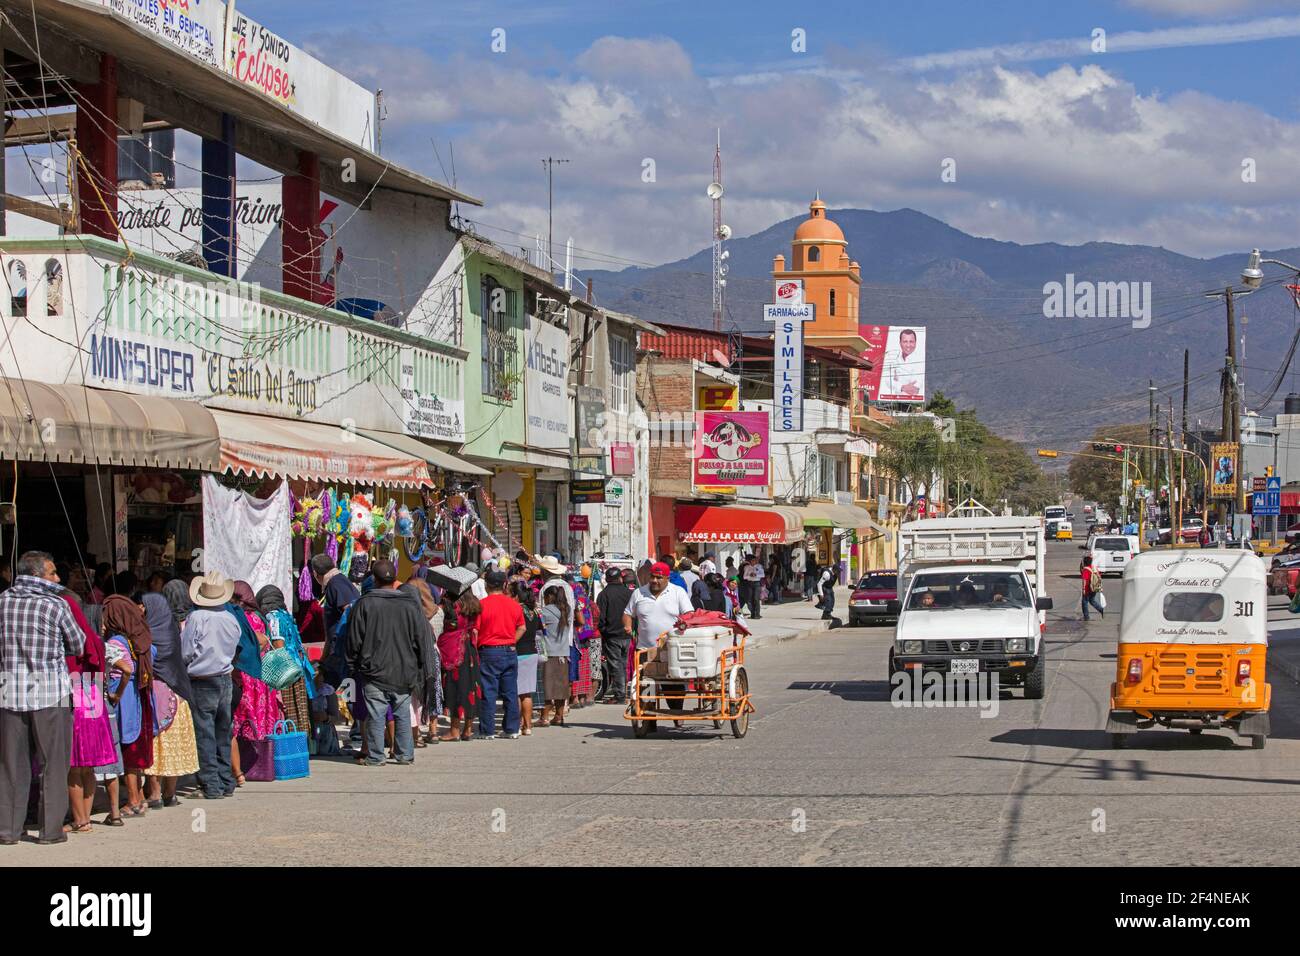 Street with market stalls in the city Tlacolula de Matamoros, Oaxaca, southwestern Mexico Stock Photo